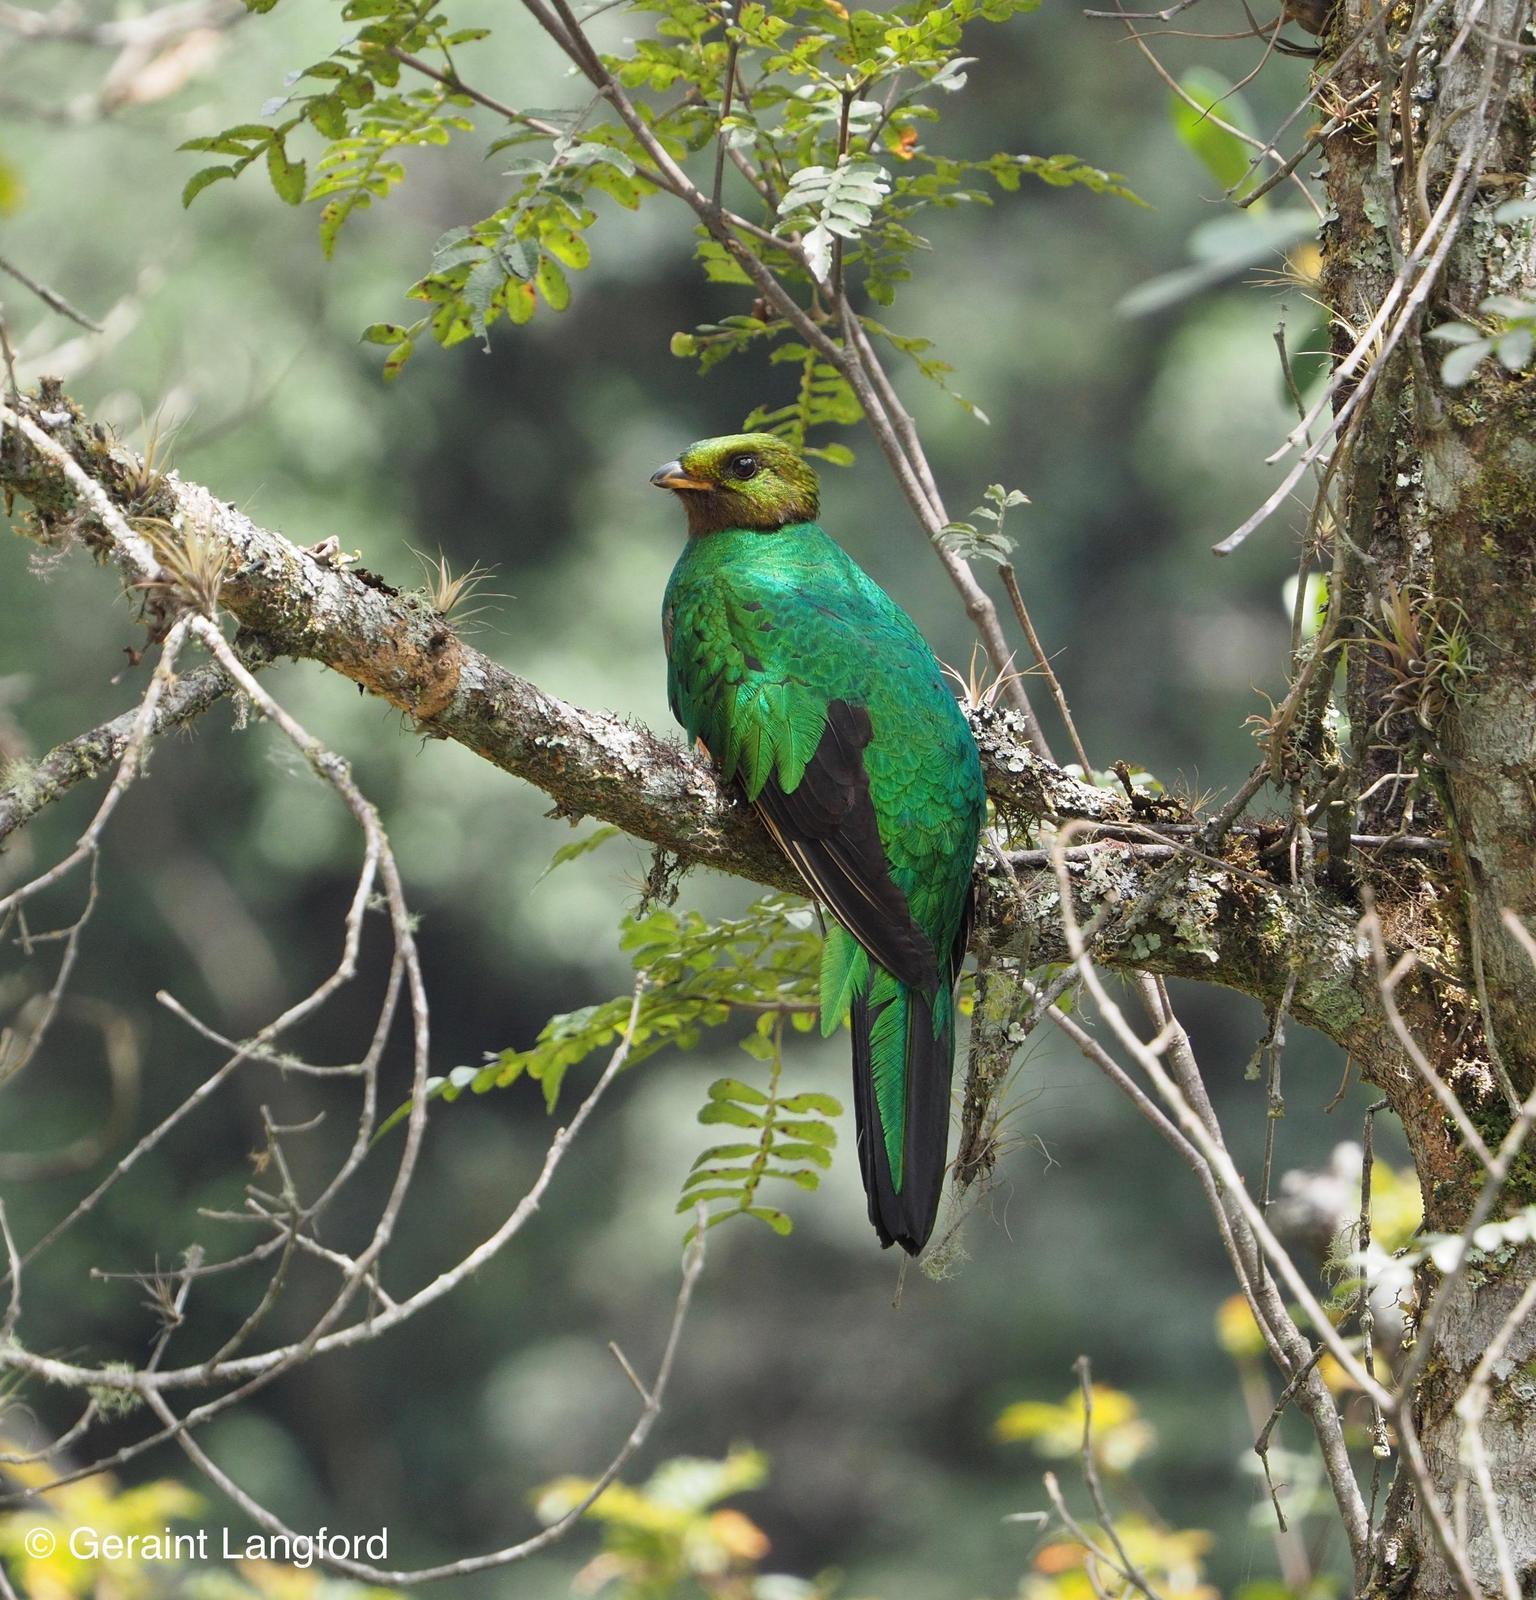 Golden-headed Quetzal Photo by Geraint Langford